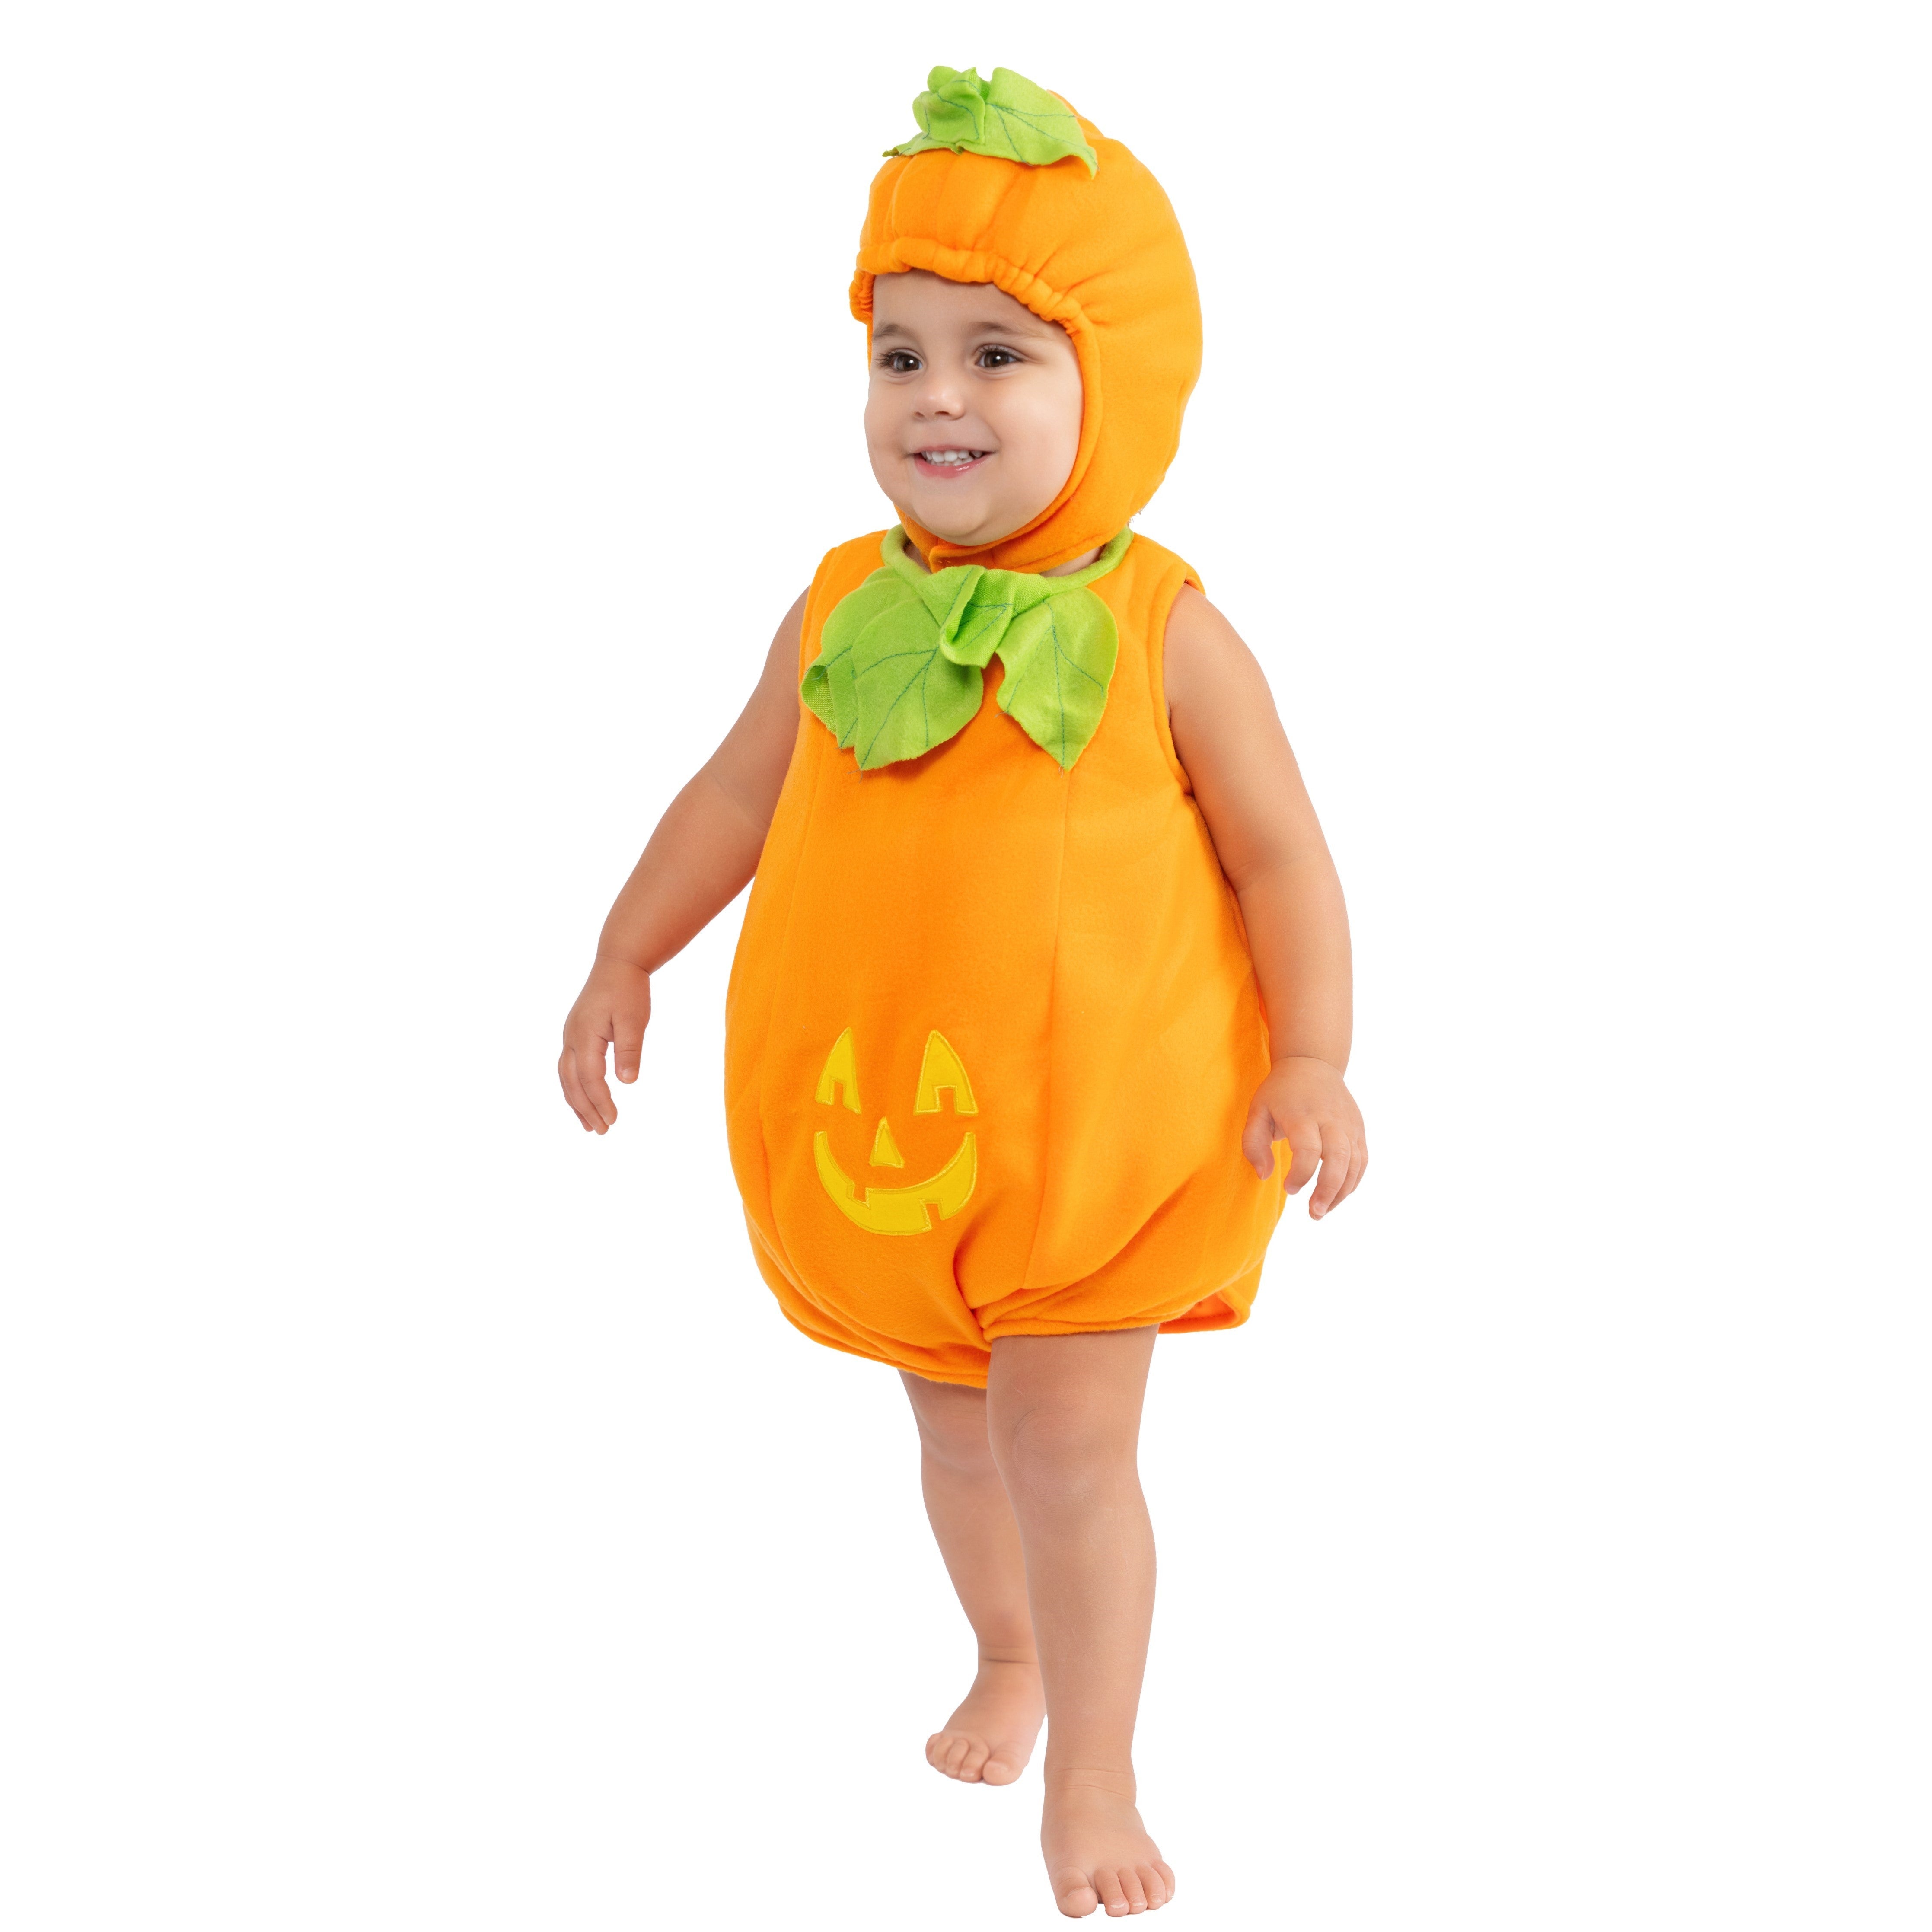 Jack-o'-lantern Pumpkin Costume - Babies